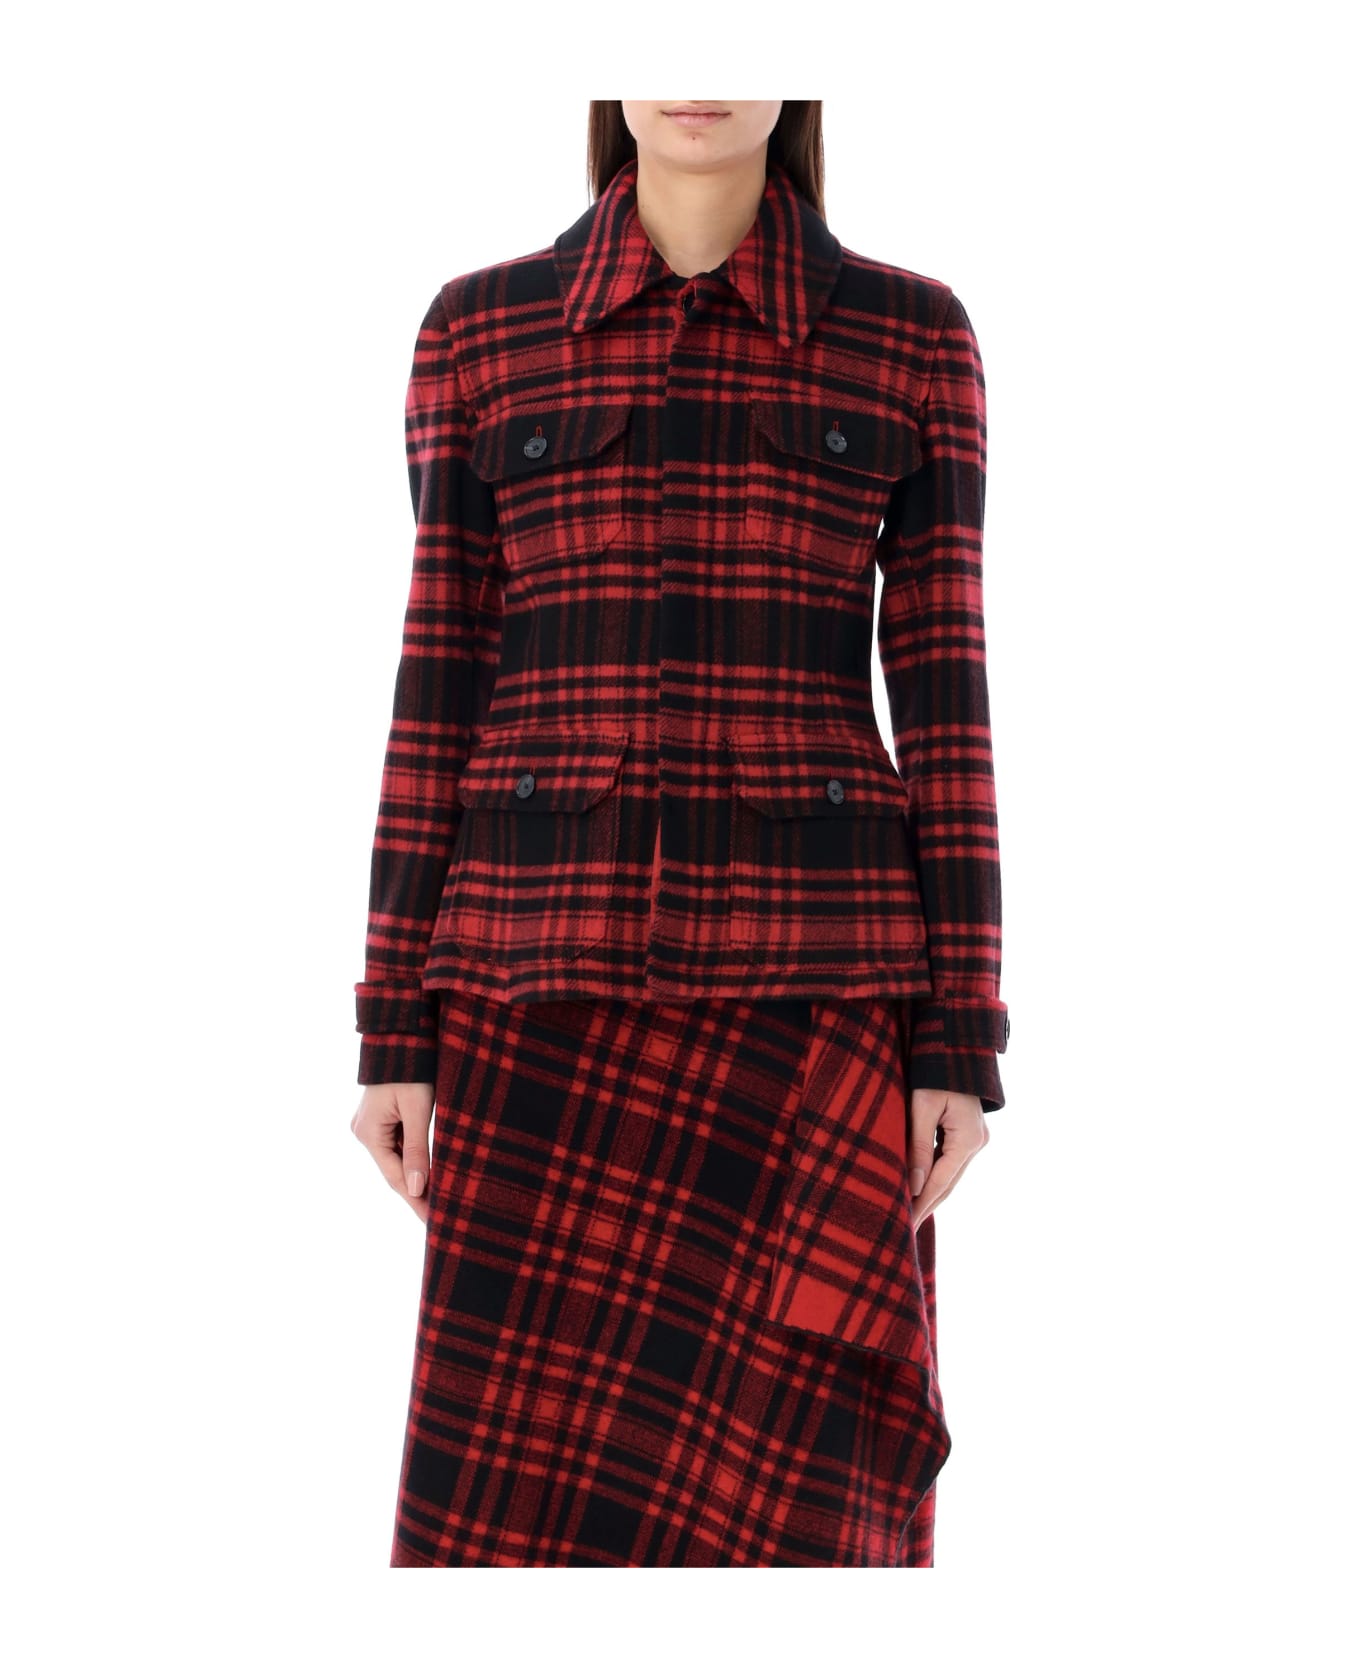 Polo Ralph Lauren Plaid Wool Twill Utility Jacket - RED BLACK PLAID